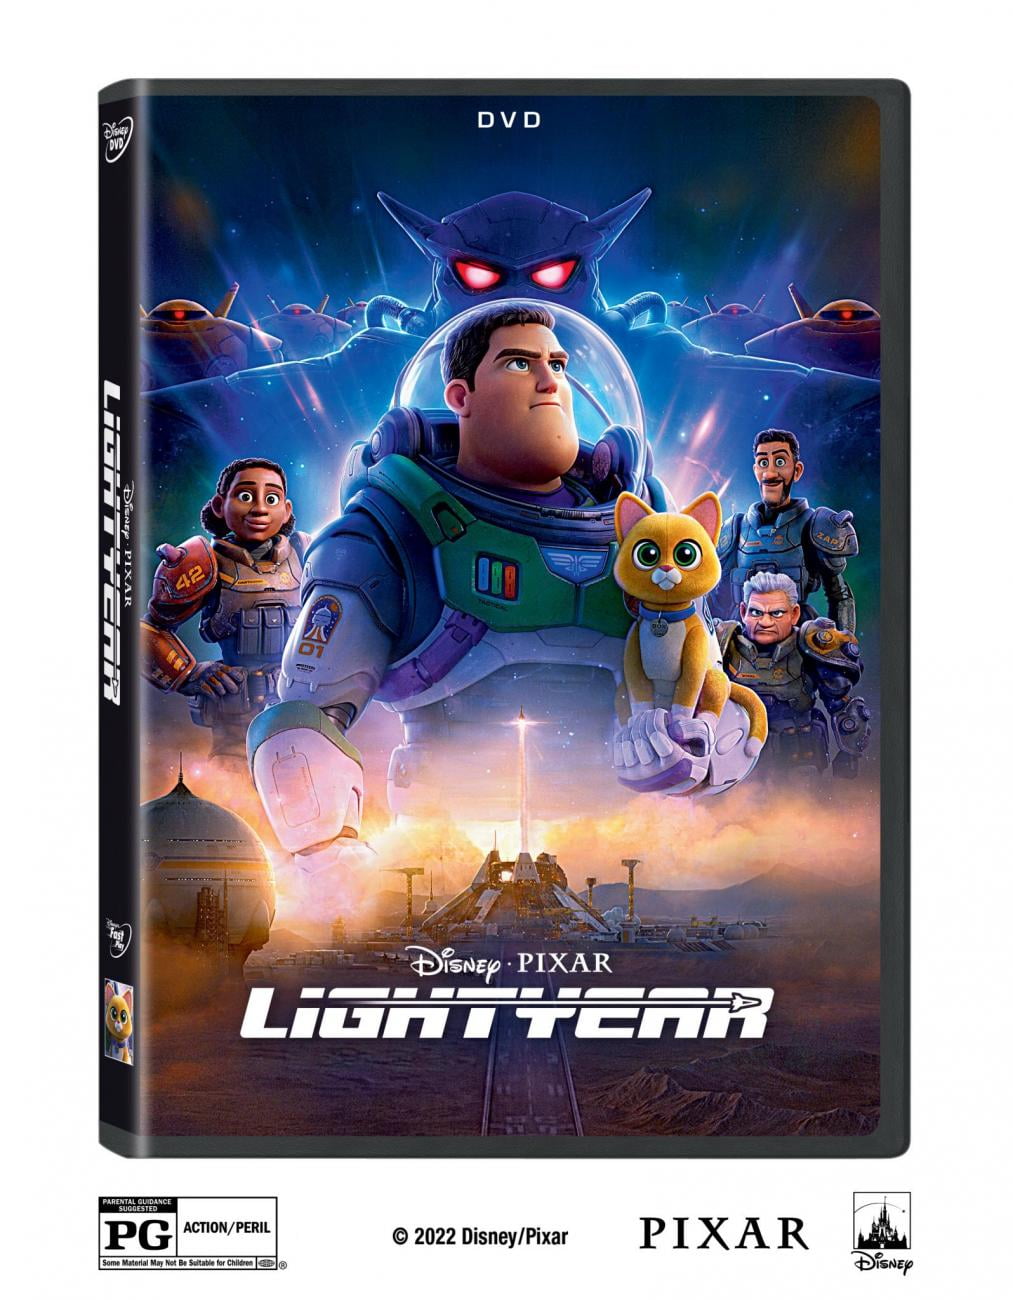 Lightyear (DVD)